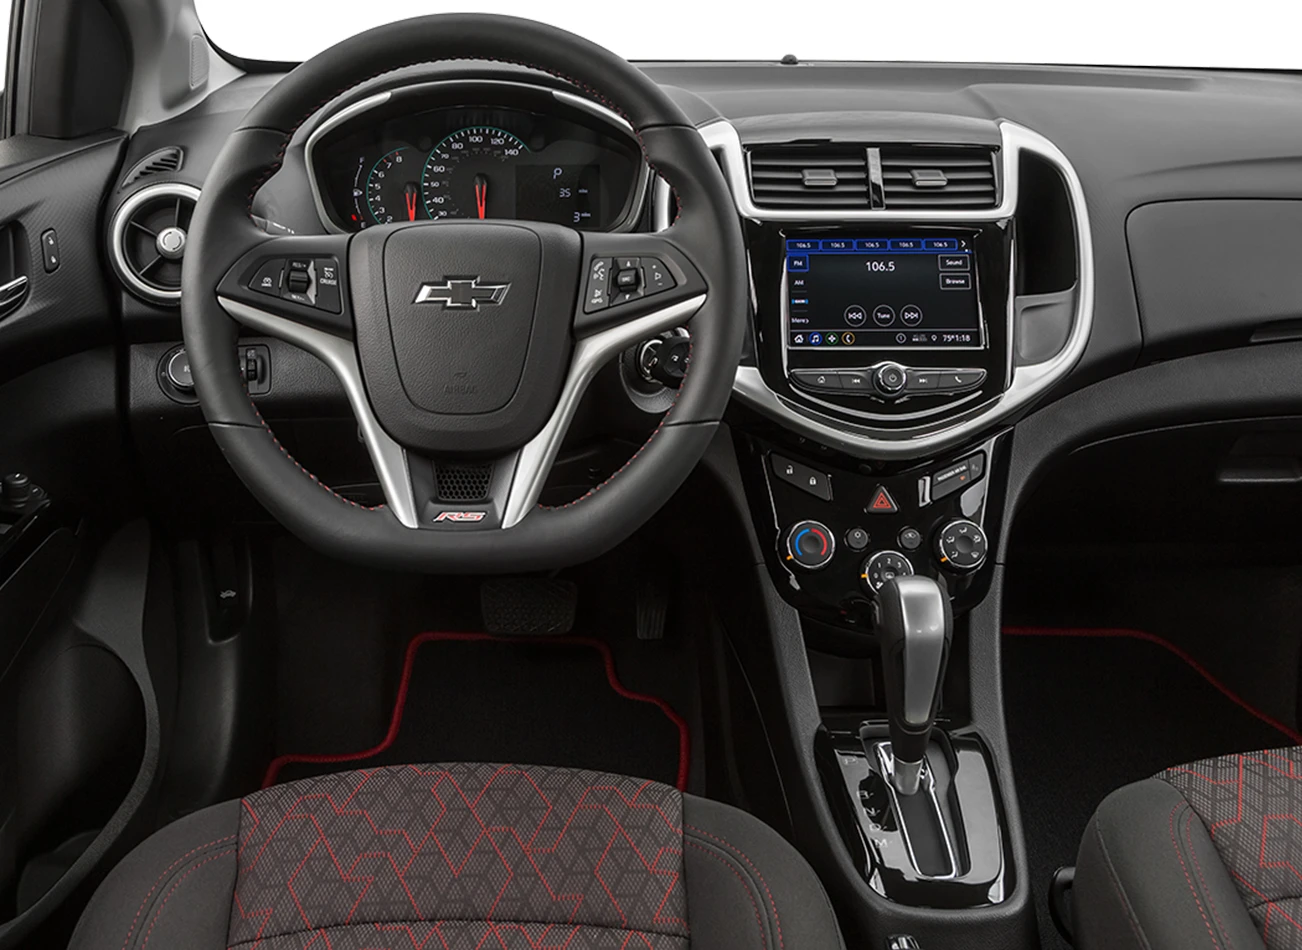 2020 Chevrolet Sonic: Steering wheel and display screen | CarMax